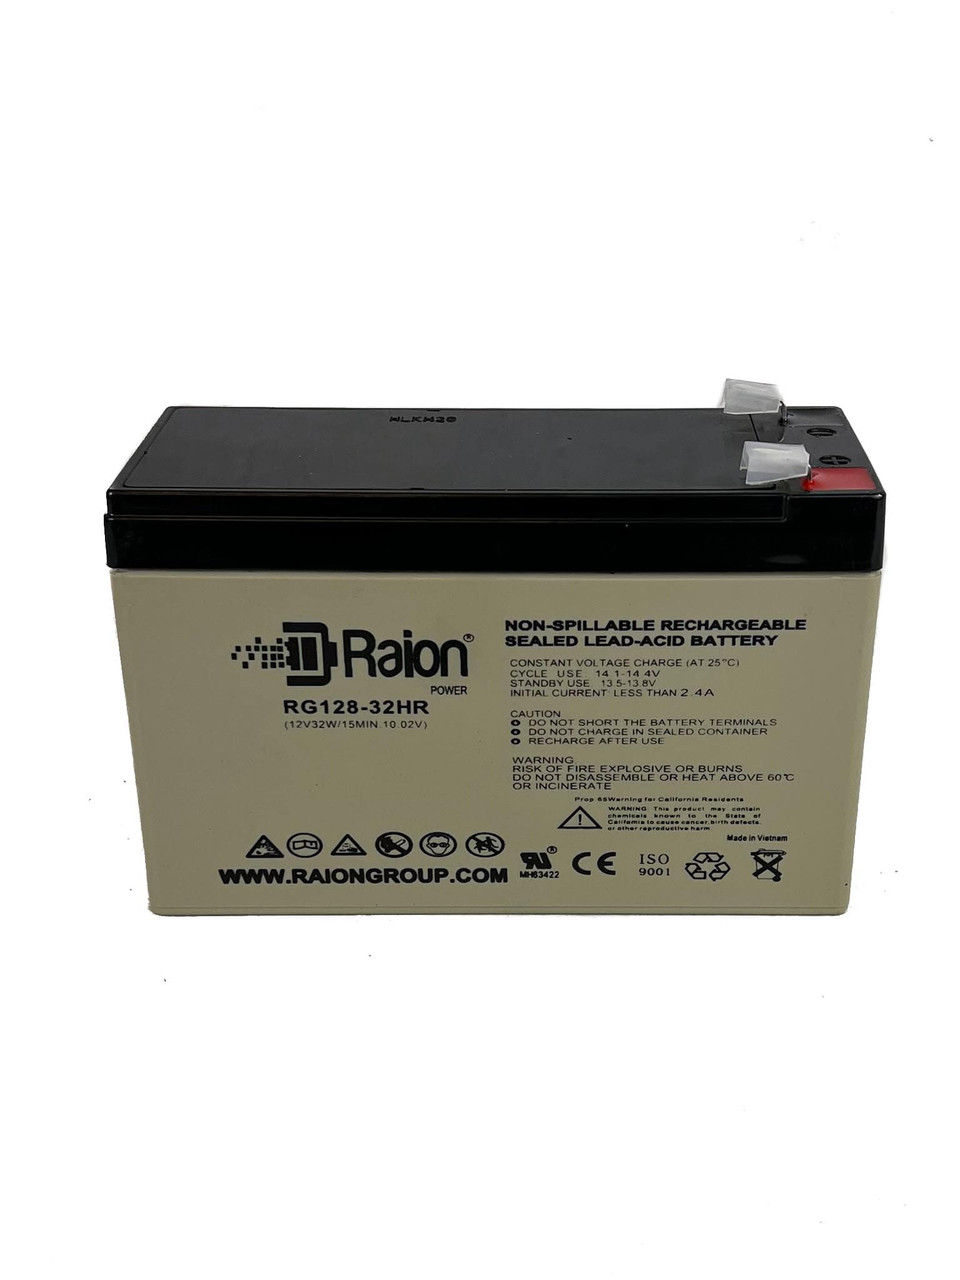 Raion Power RG128-32HR Replacement High Rate Battery Cartridge for ATT U-verse